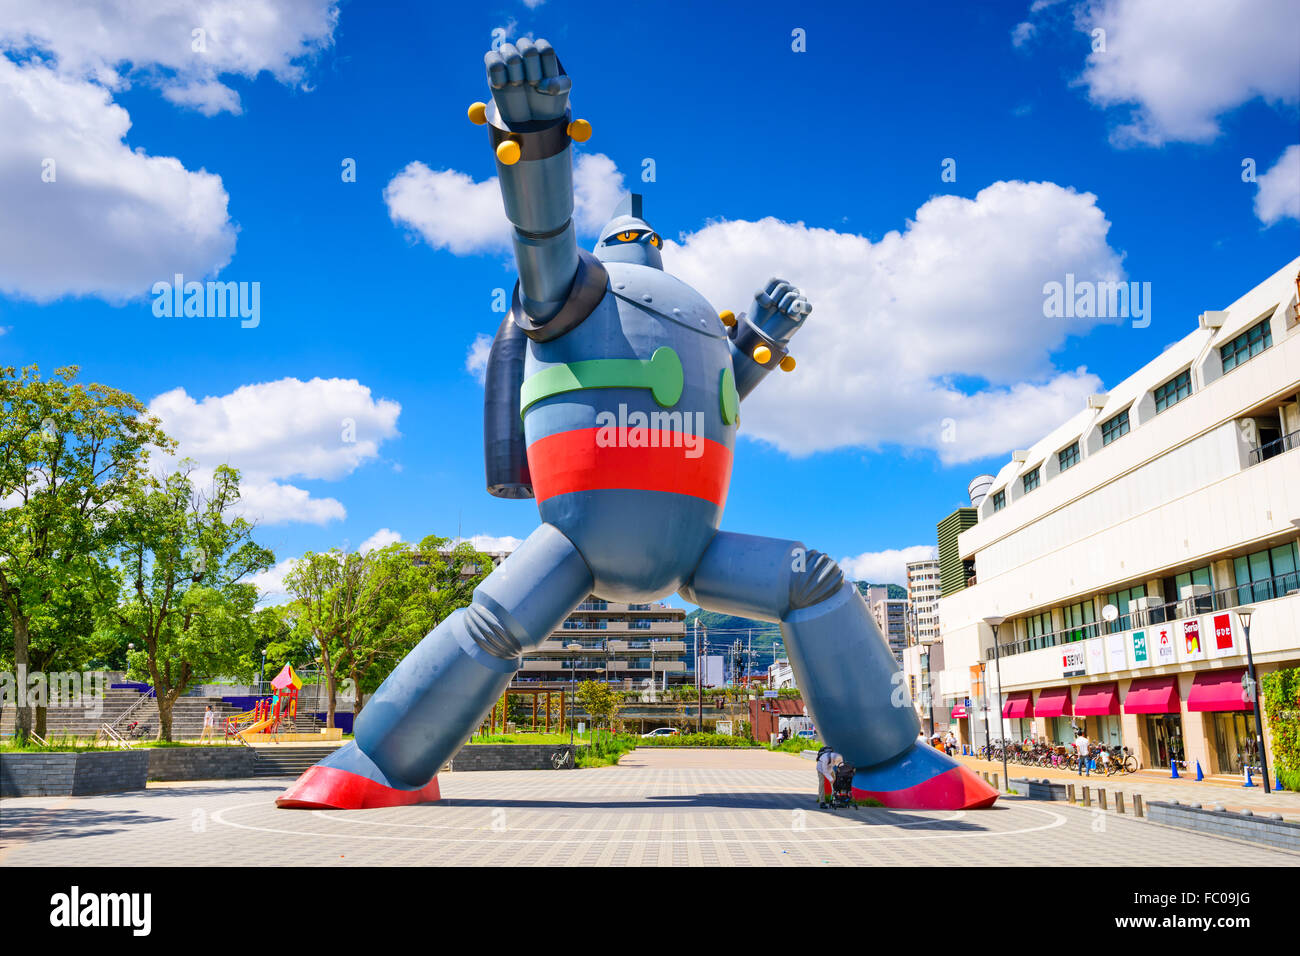 Das Gigantor-Roboter-Denkmal am Bahnhof Shin-Nagata in Kobe, Japan. Stockfoto